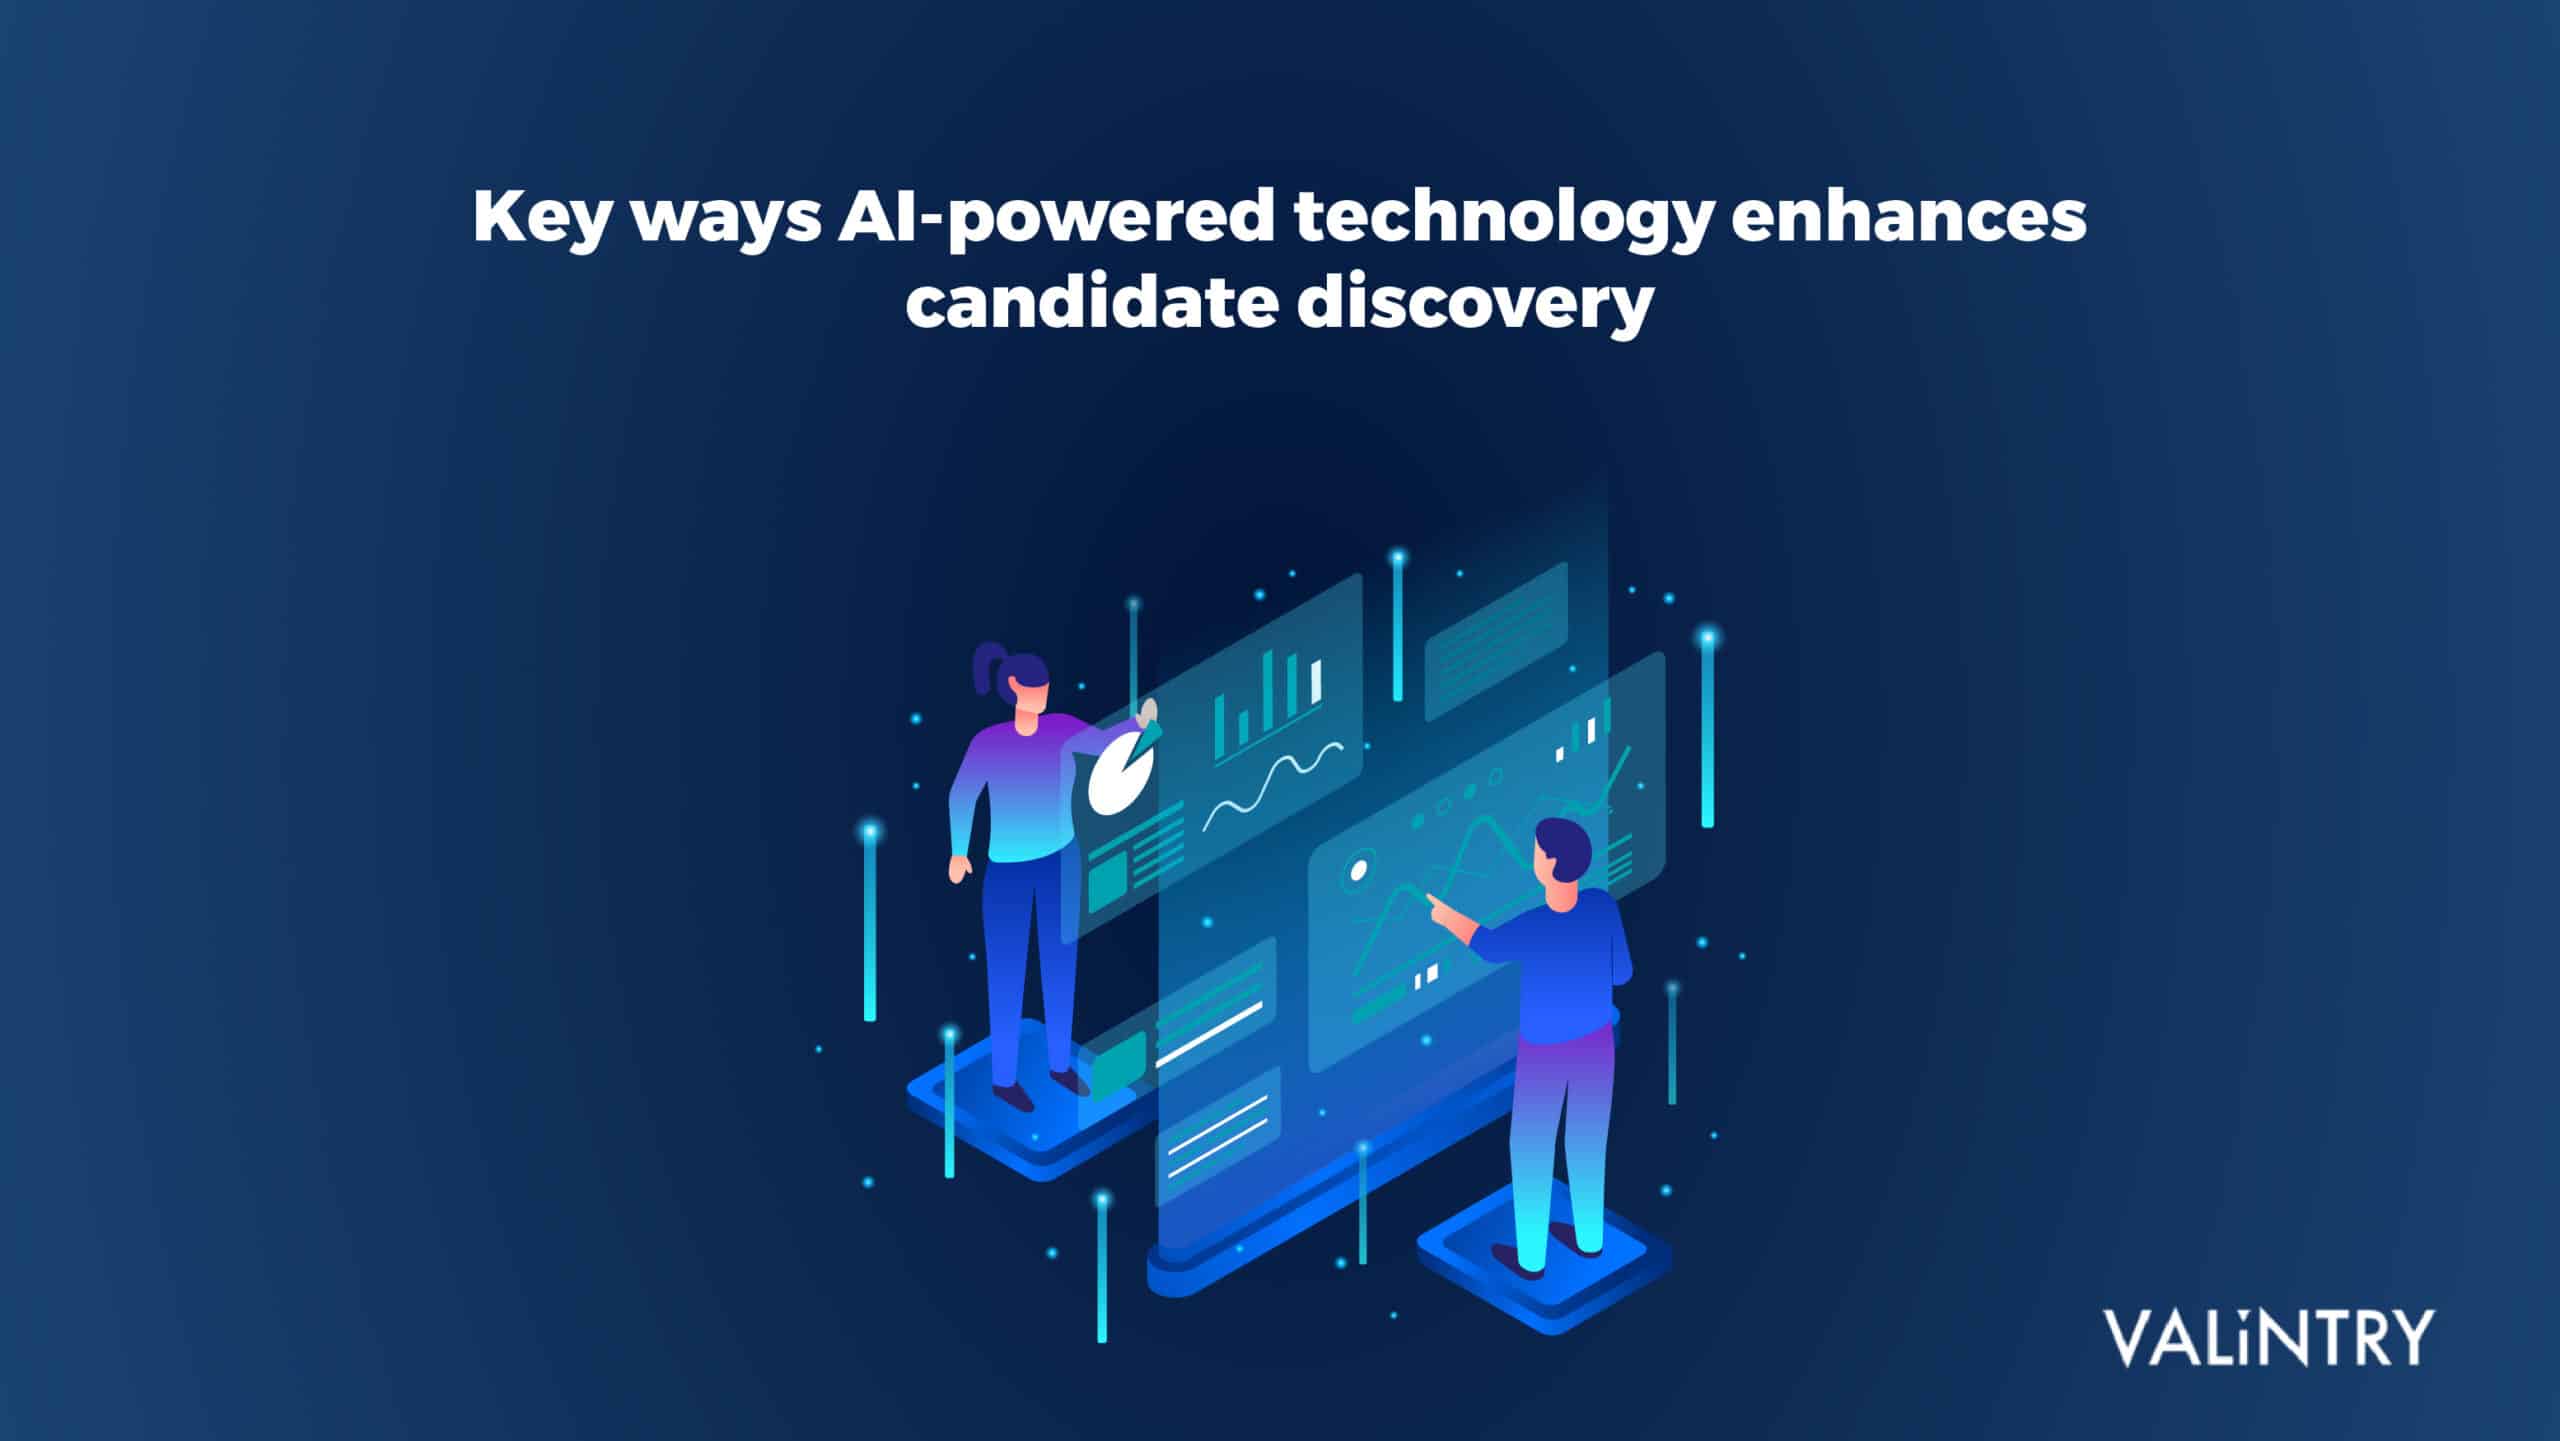 AI Recruiting Companies